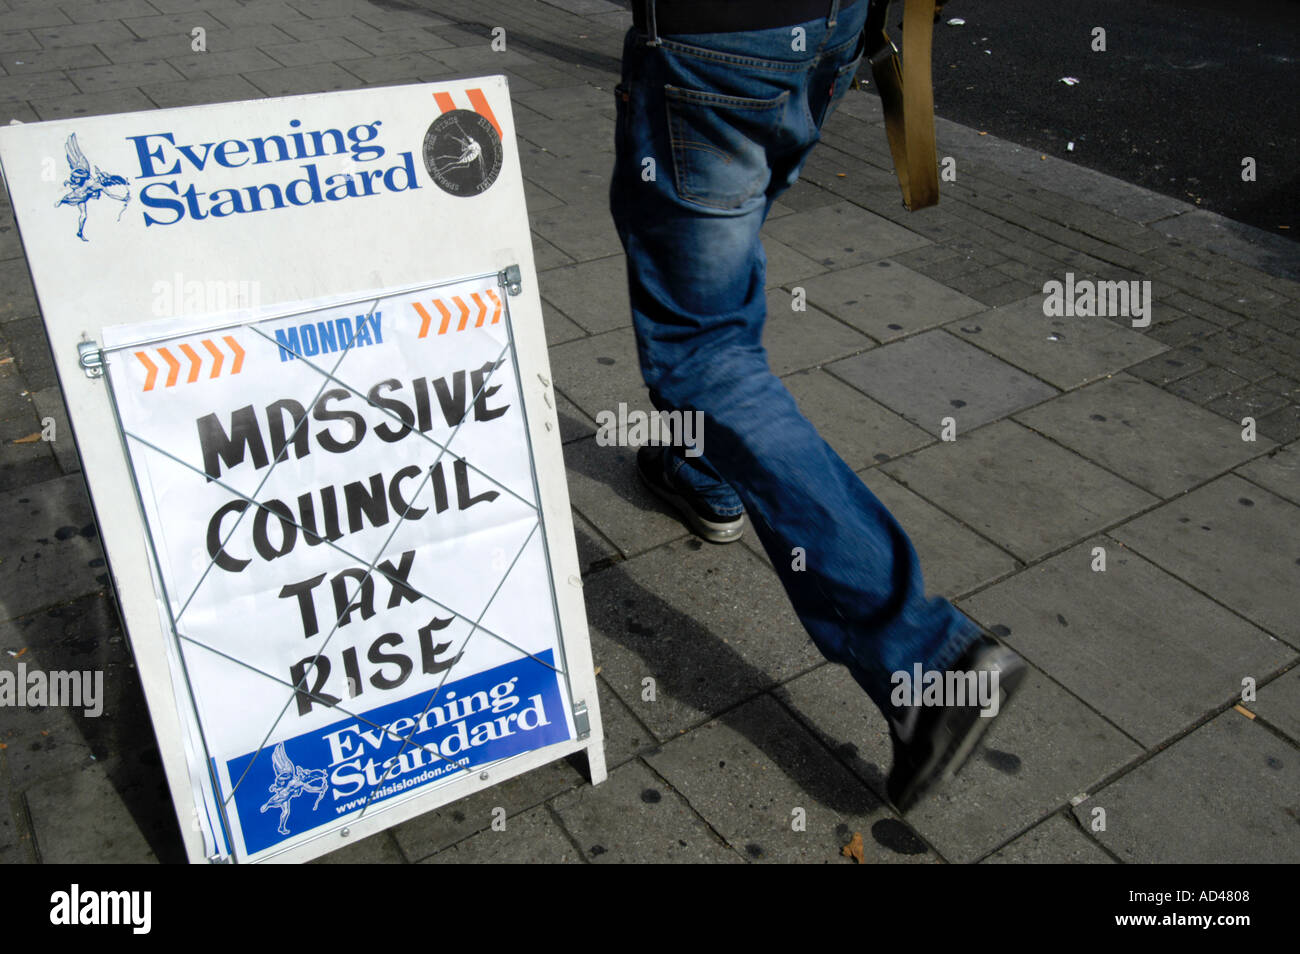 Headline on Evening Standard newspaper hoarding Massive Council Tax Rise London England UK Stock Photo